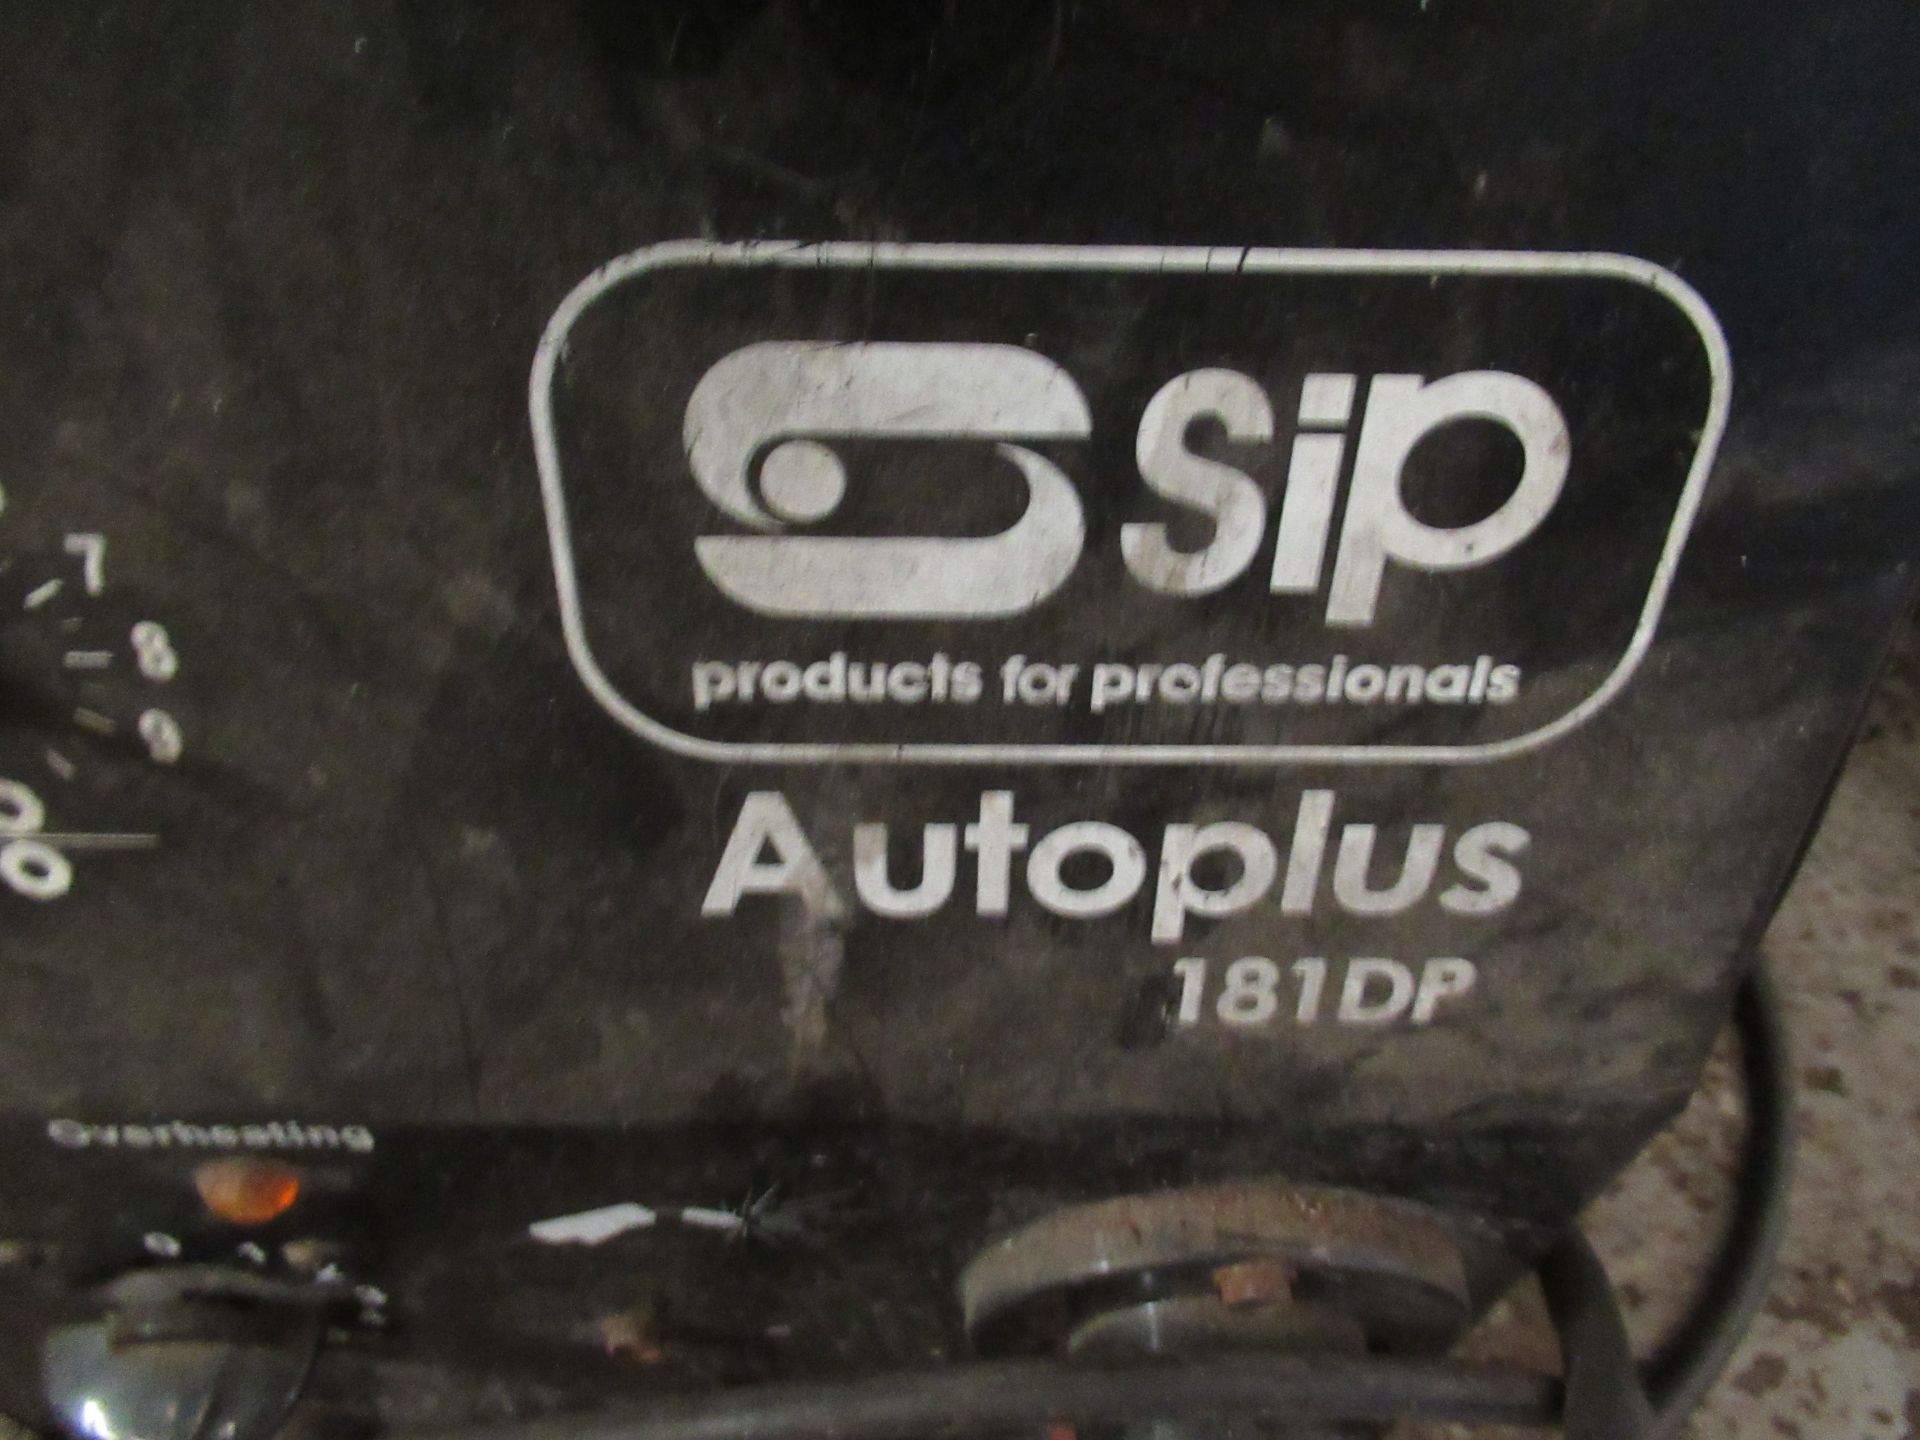 SIP Autoplus 181 DP Mig Welding Unit with Mask - Image 2 of 4